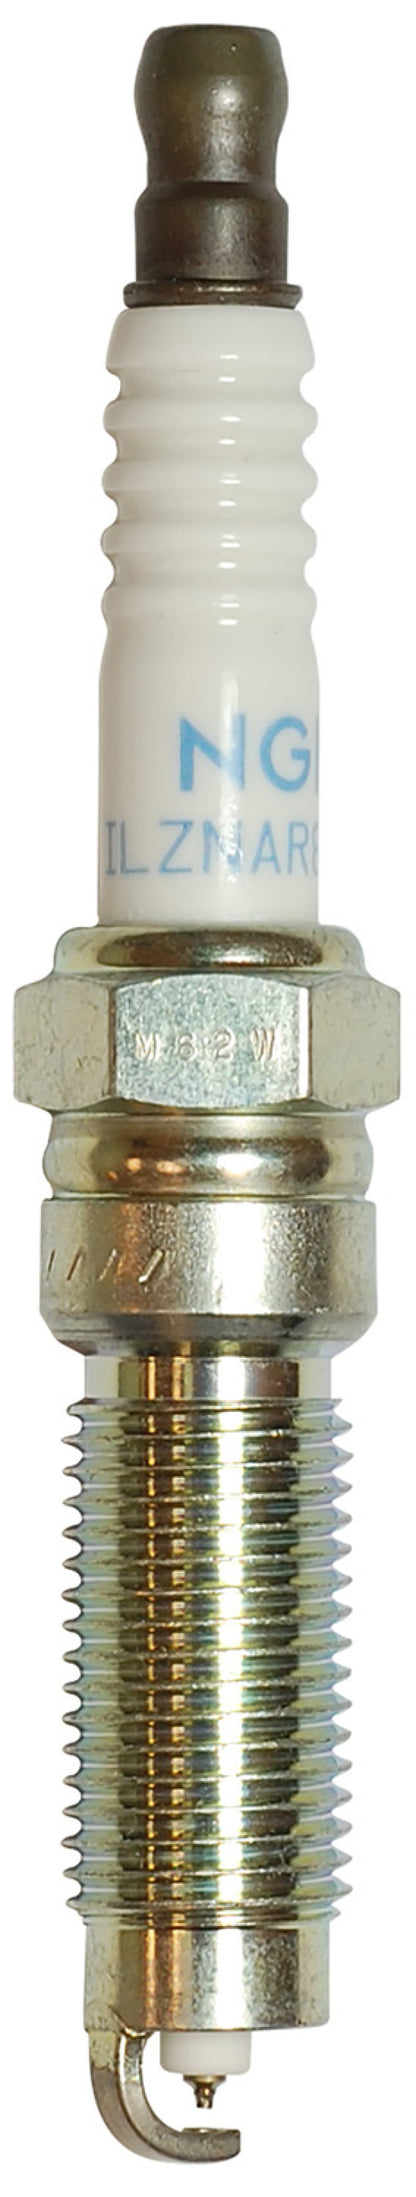 NGK Laser Iridium Spark Plug Box of 4 (ILZNAR8A7G)